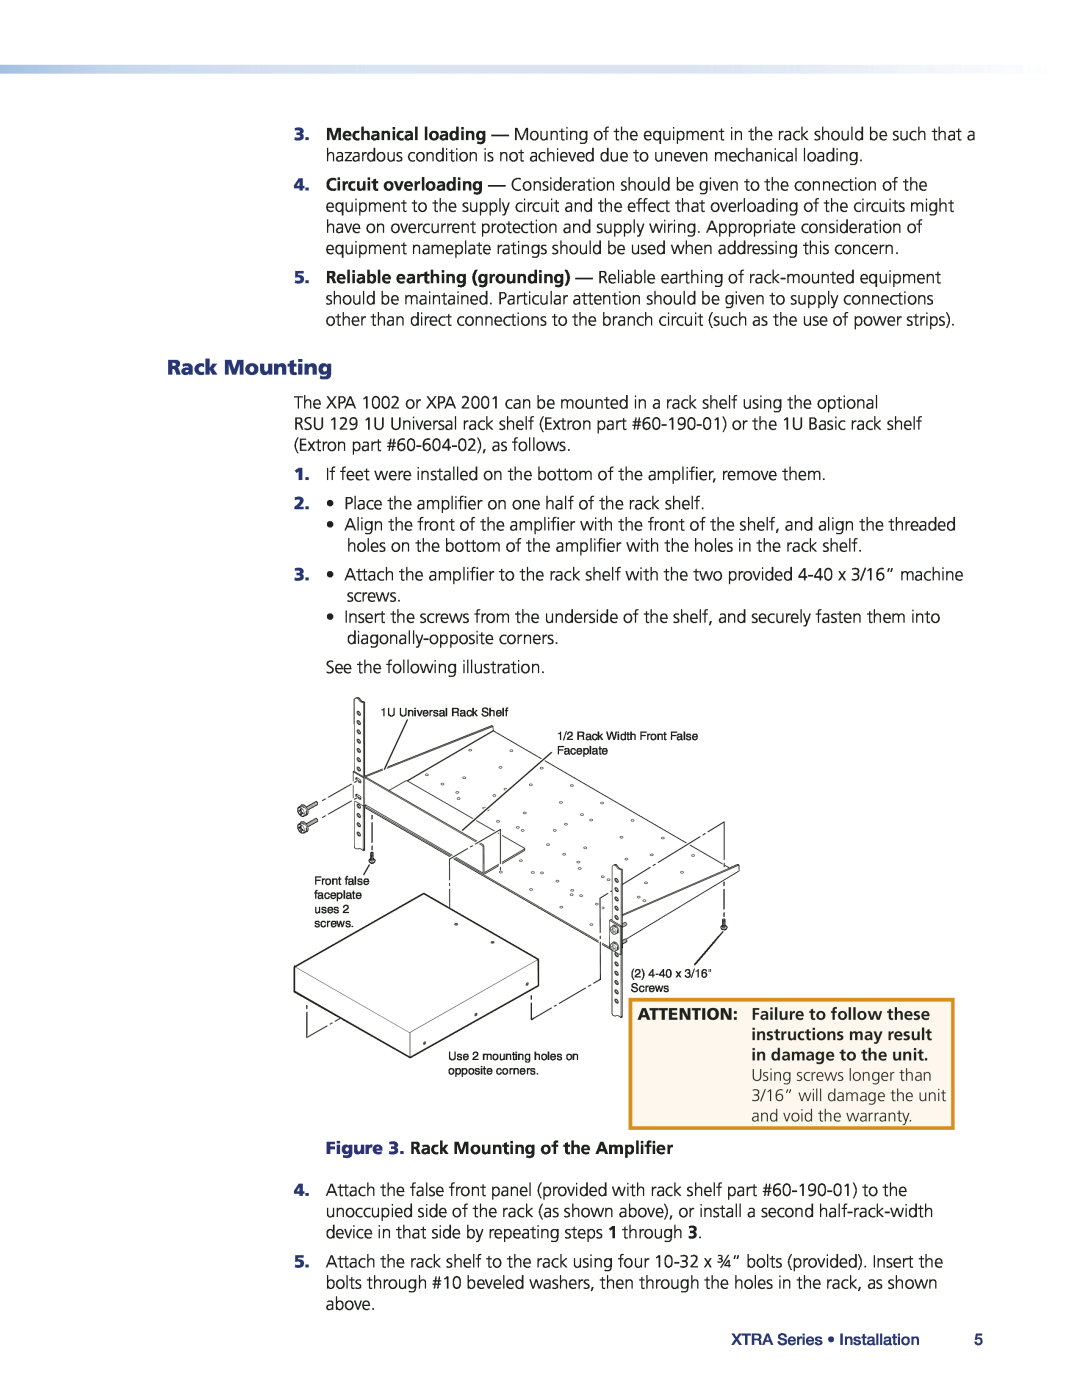 Extron electronic XPA2001-100V, XPA2001-70V, XPA1002 manual Rack Mounting of the Amplifier 